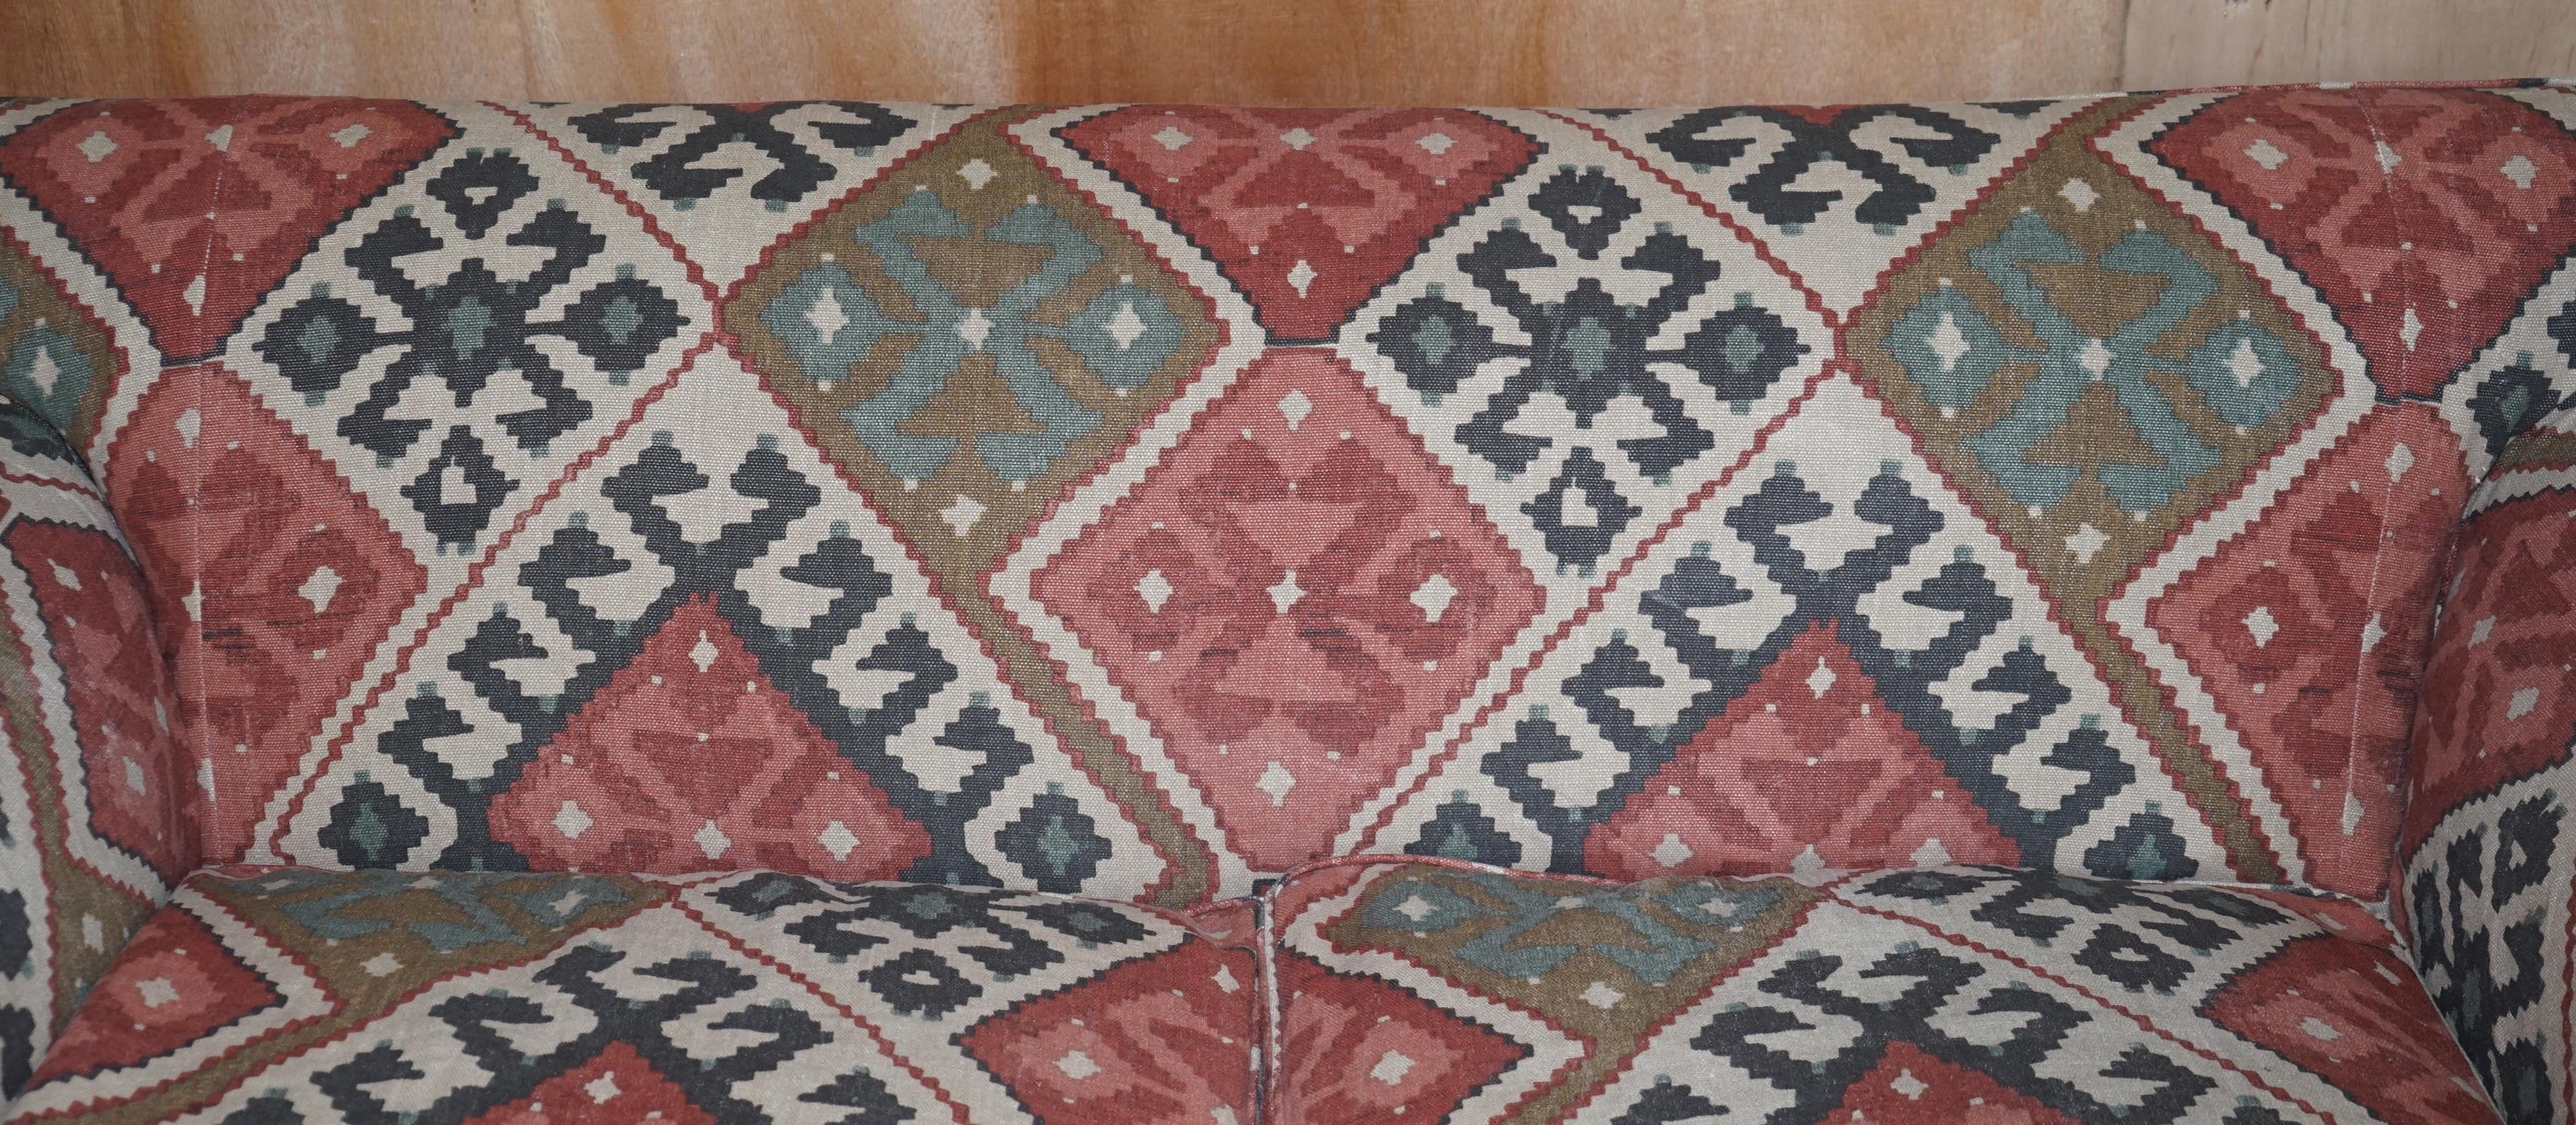 Exquisite Original Victorian Kilim Upholstered Sofa Hardwood Turned Front Legs For Sale 1